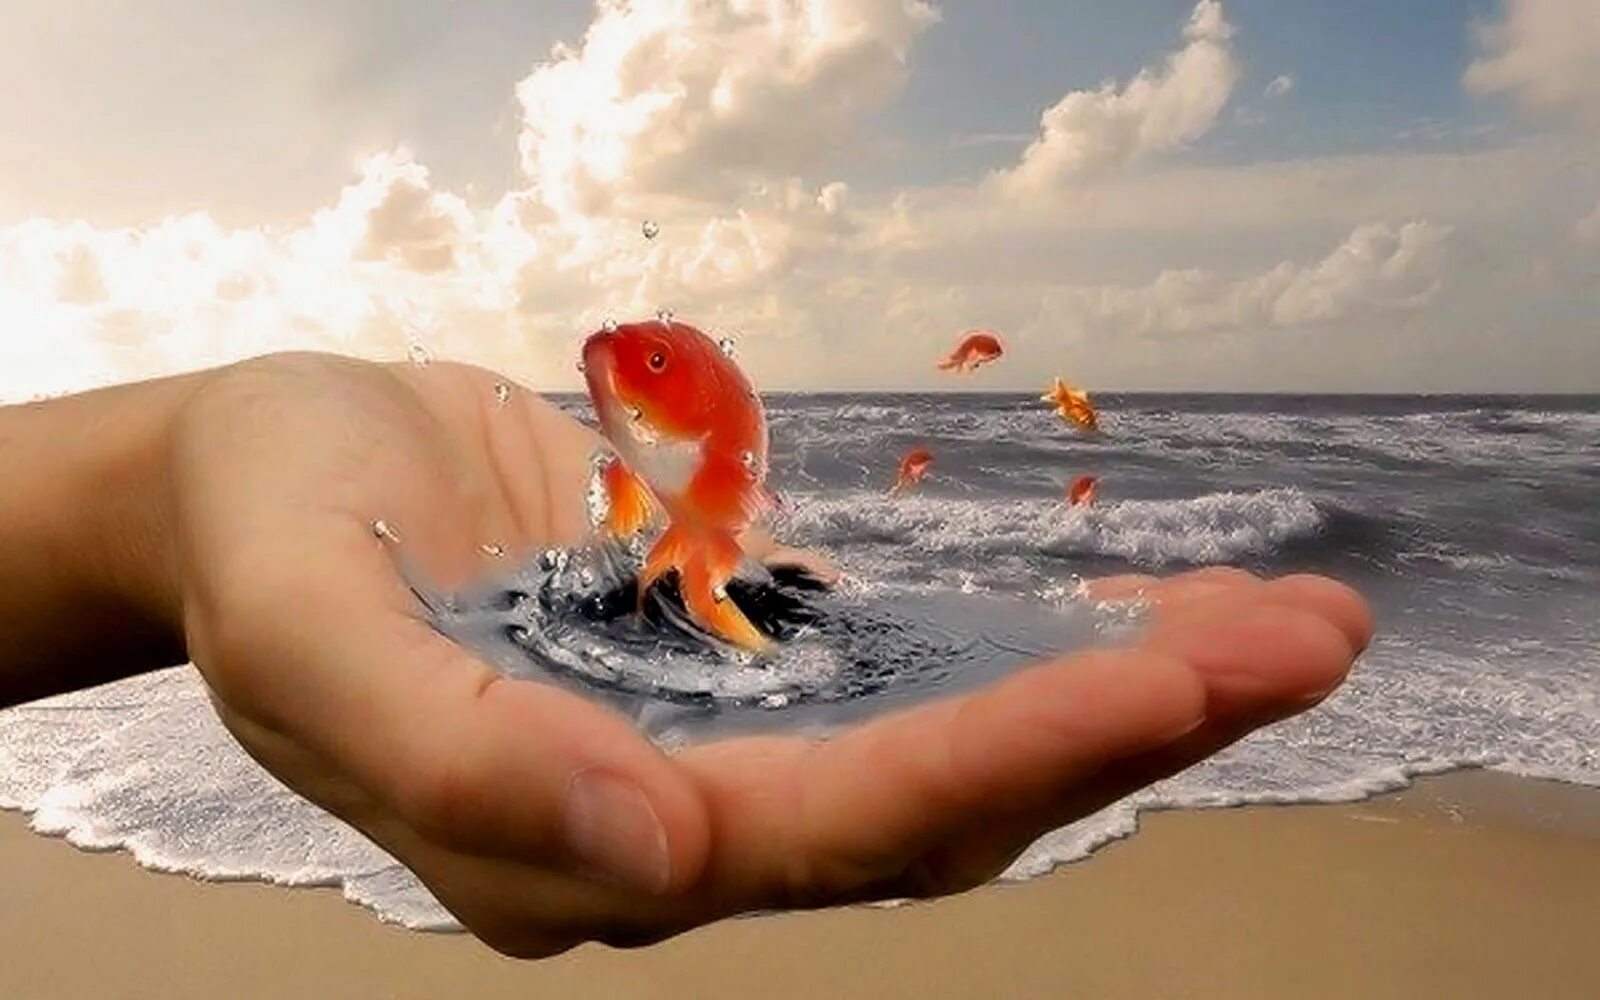 Пора несчастий. Золотая рыбка в руках. Золотая рыбка исполнение желаний. Добро у моря. Золотая рыбка исполняет желания.